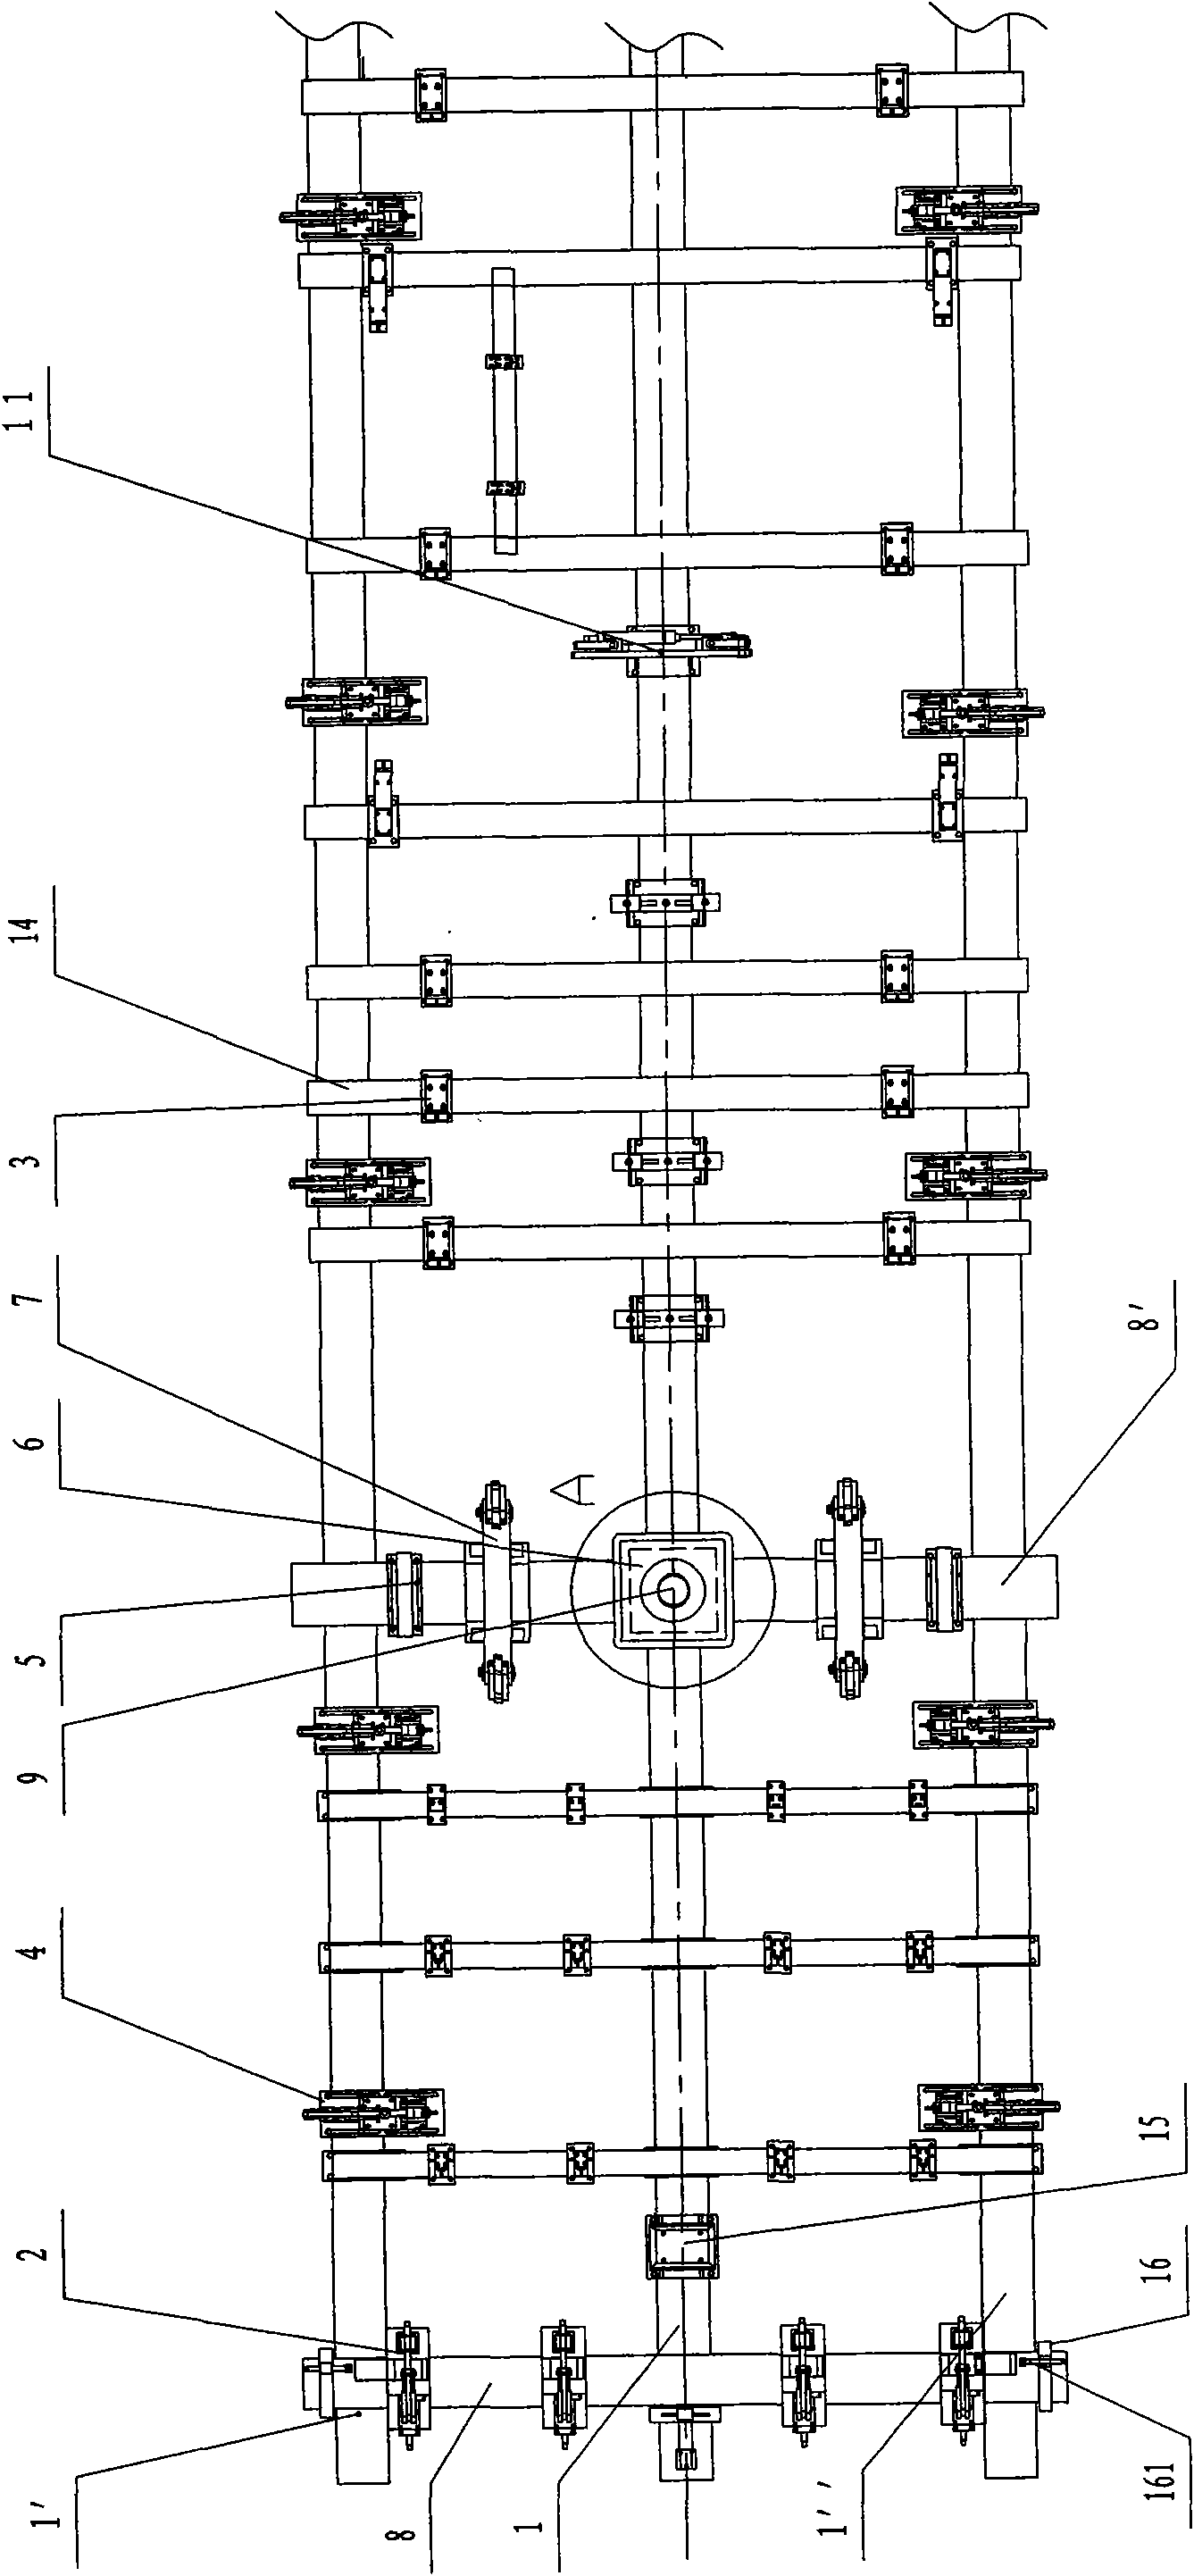 Production method of chassis of railway vehicle